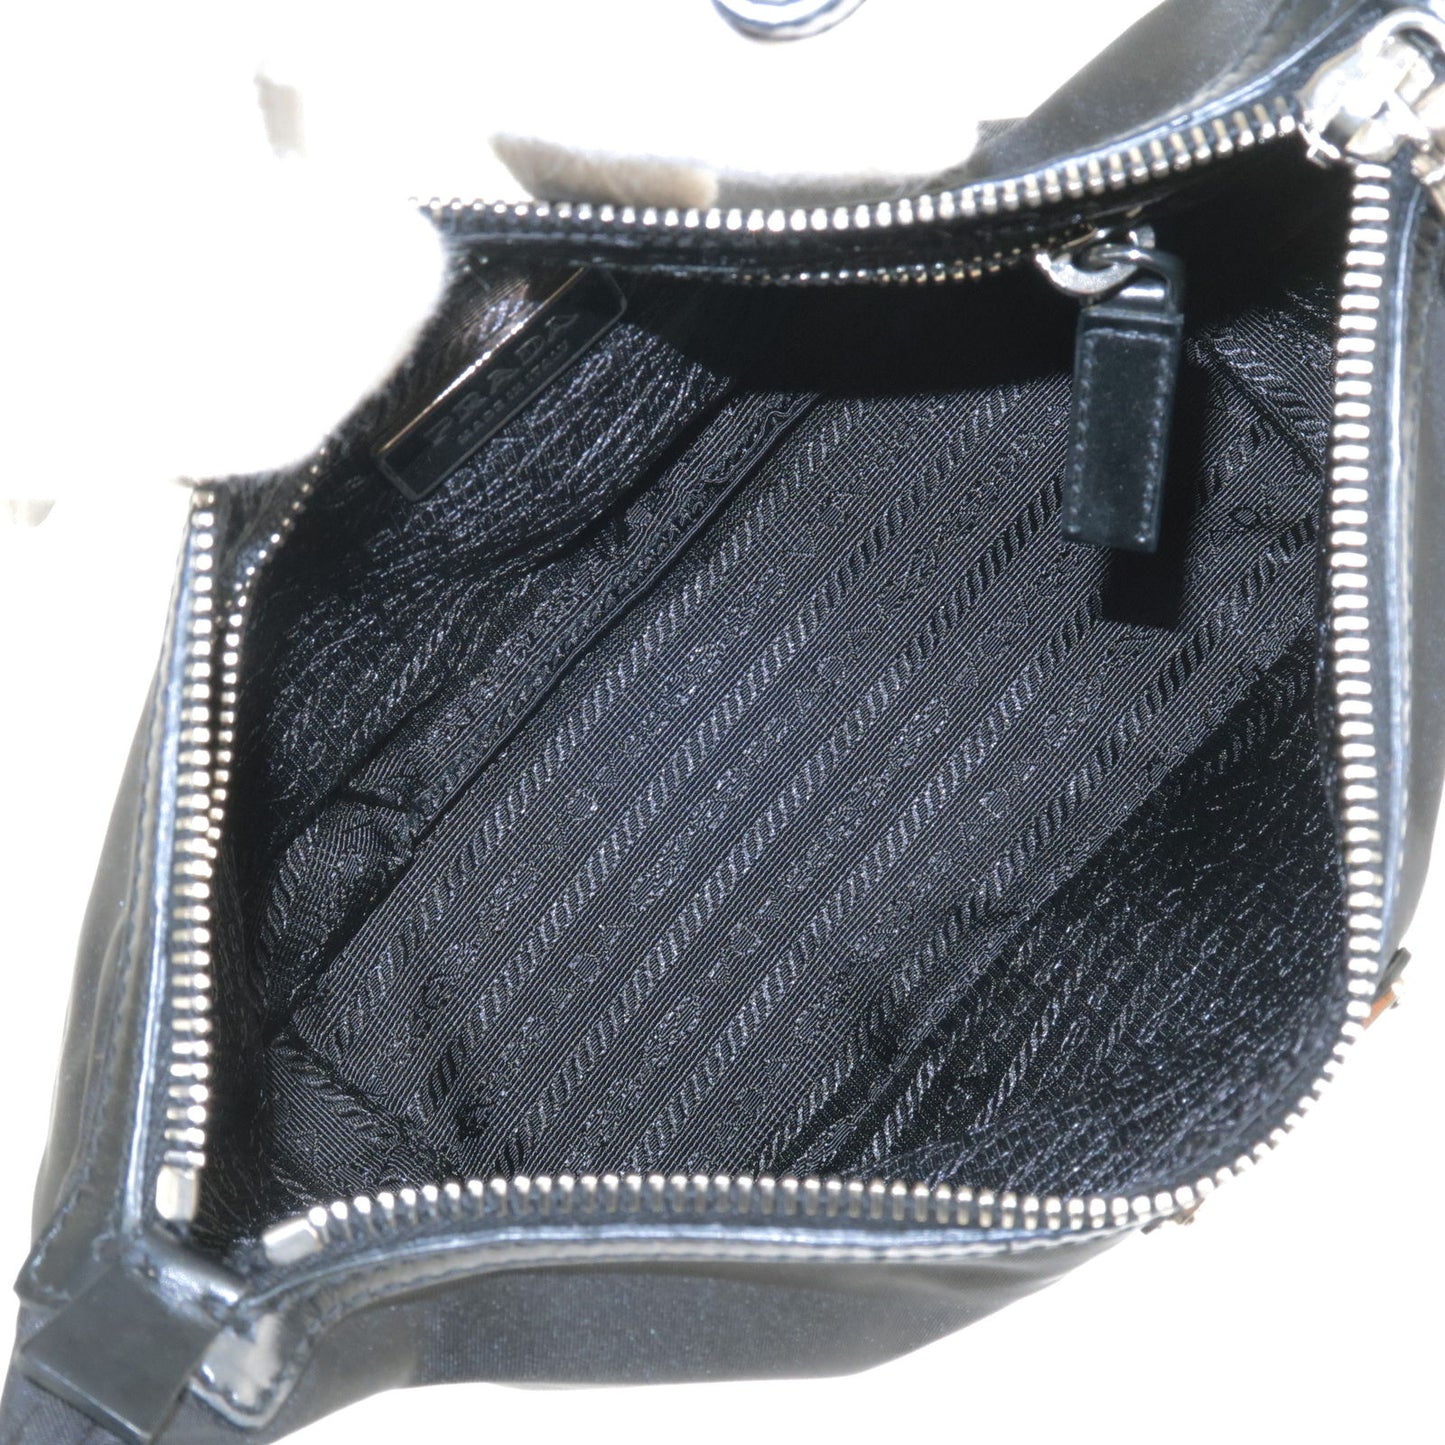 PRADA Logo Nylon Leather Shoulder Bag Hand Bag NERO Black